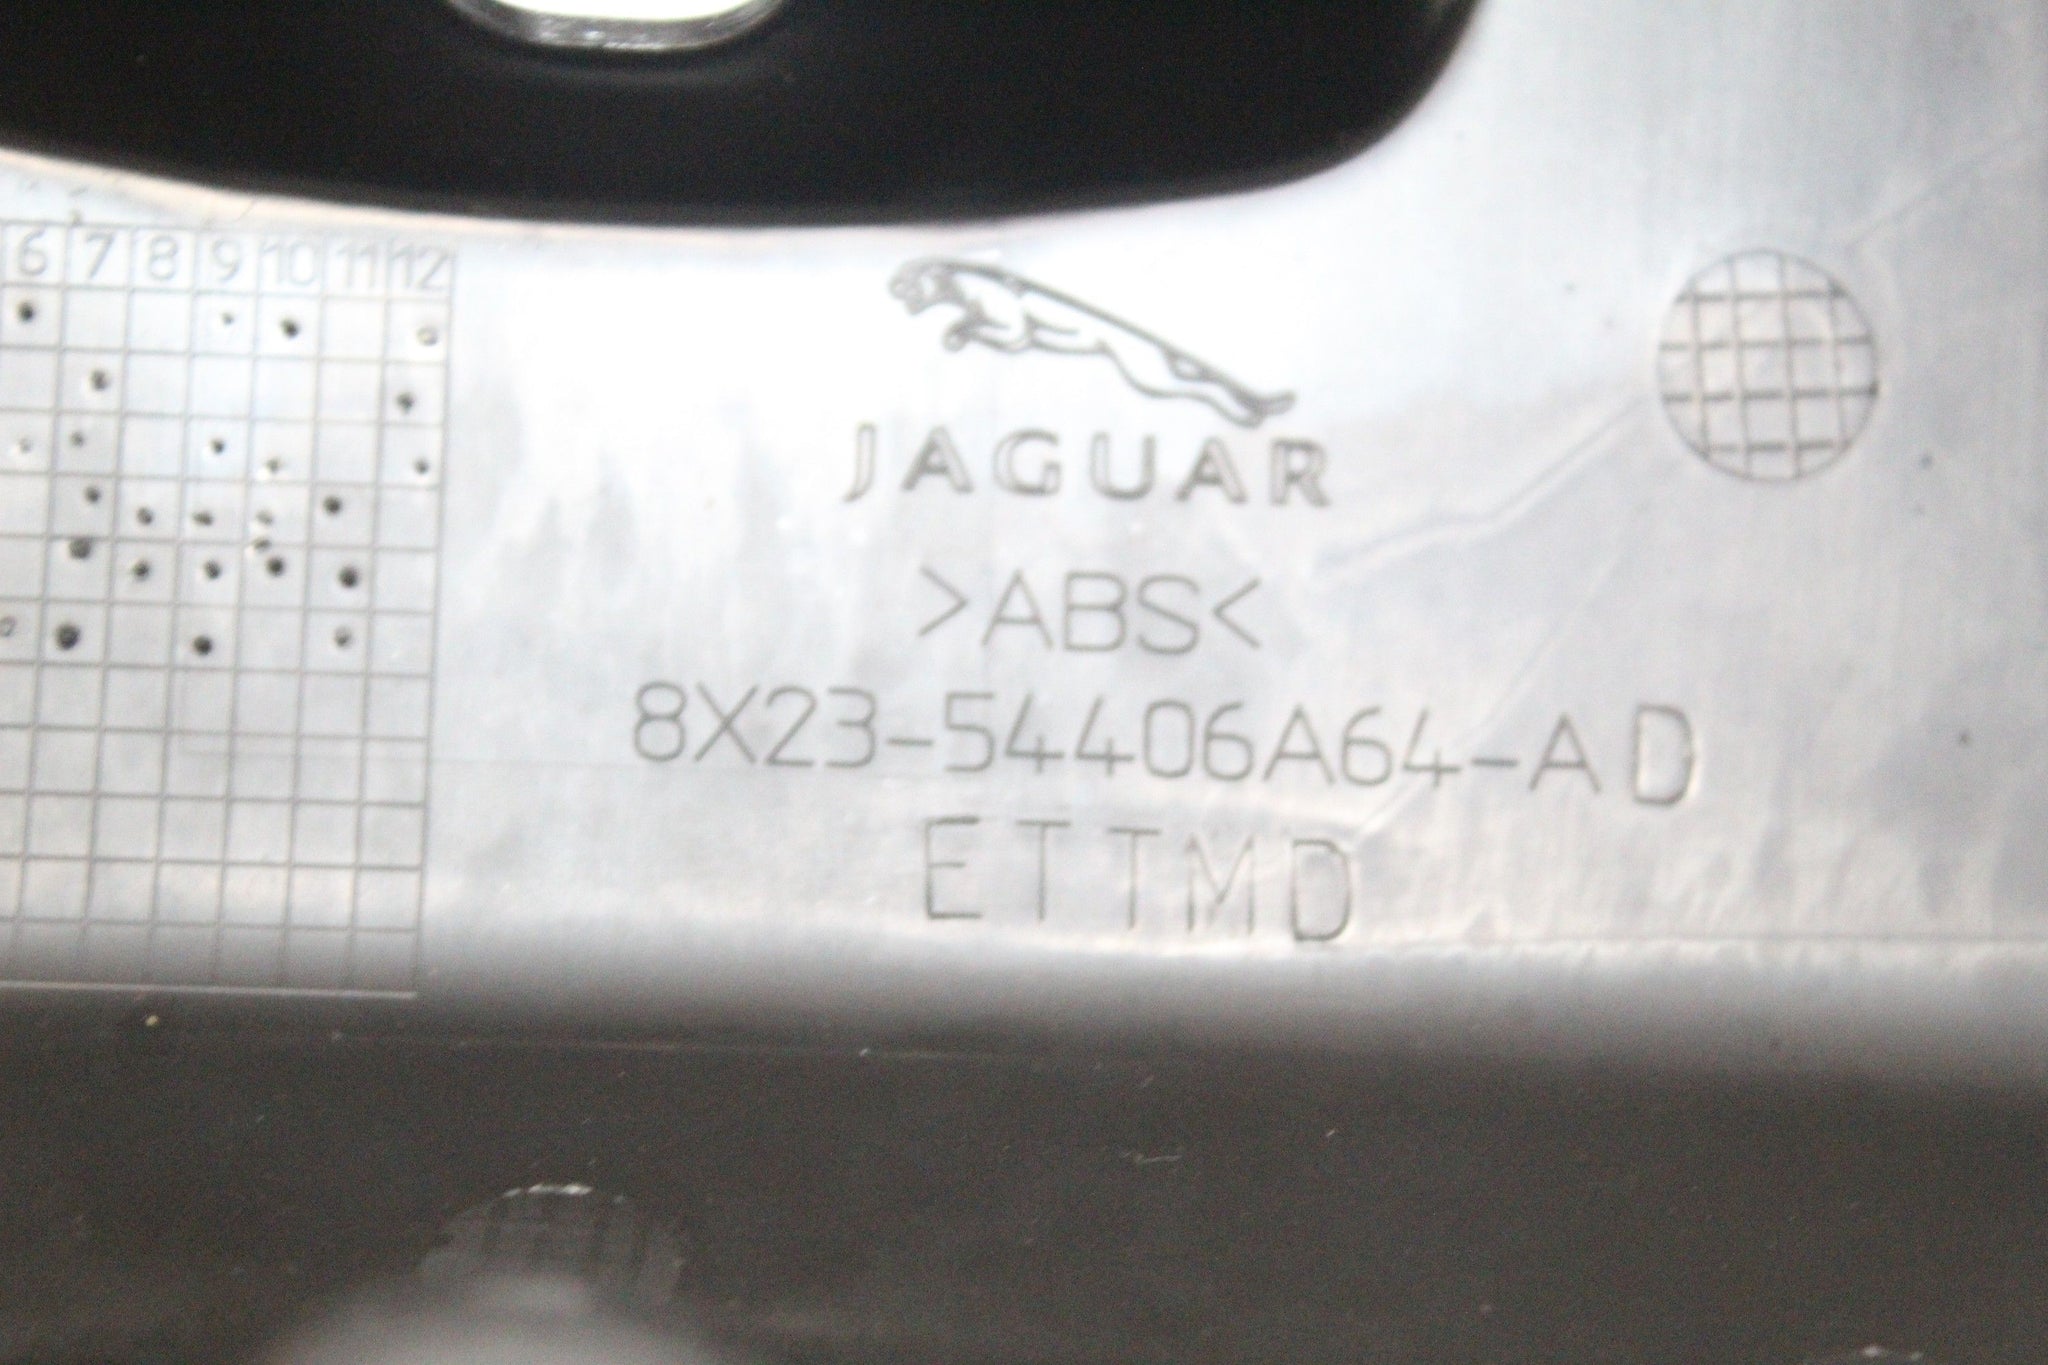 Jaguar XF Tailgate Trim Panel 2013 8X23-54406A64-AD